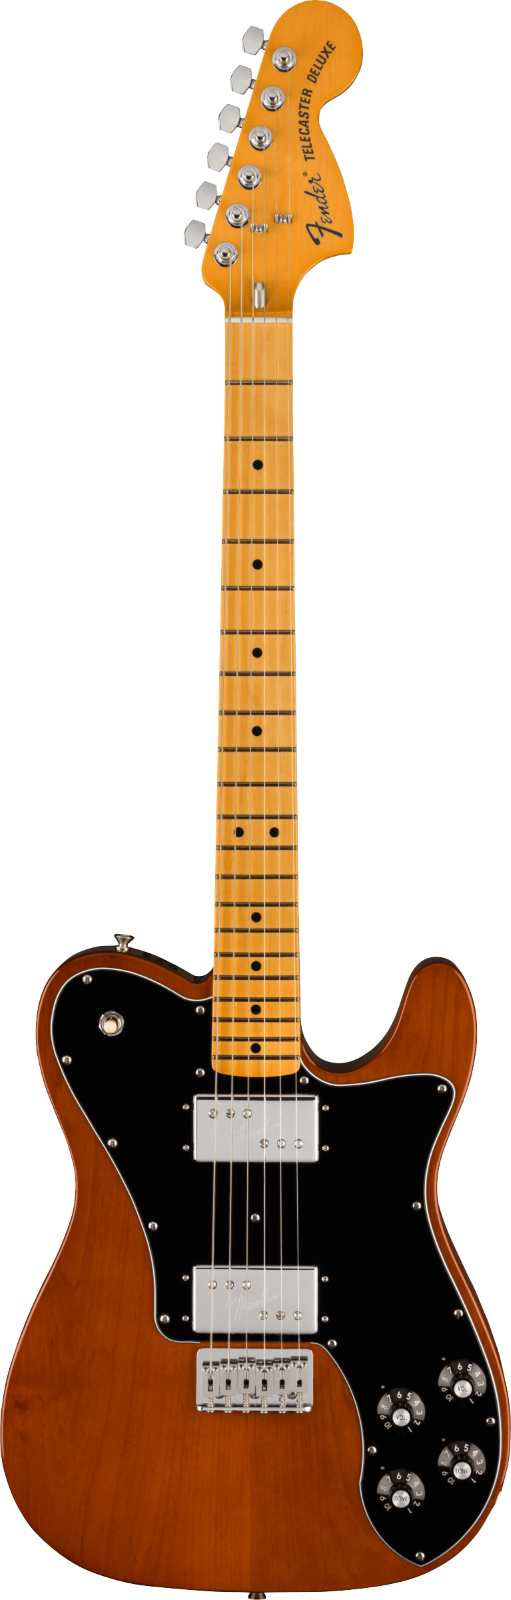 Fender American Vintage II 1975 Telecaster Deluxe, Maple Fingerboard, Mocha : photo 1